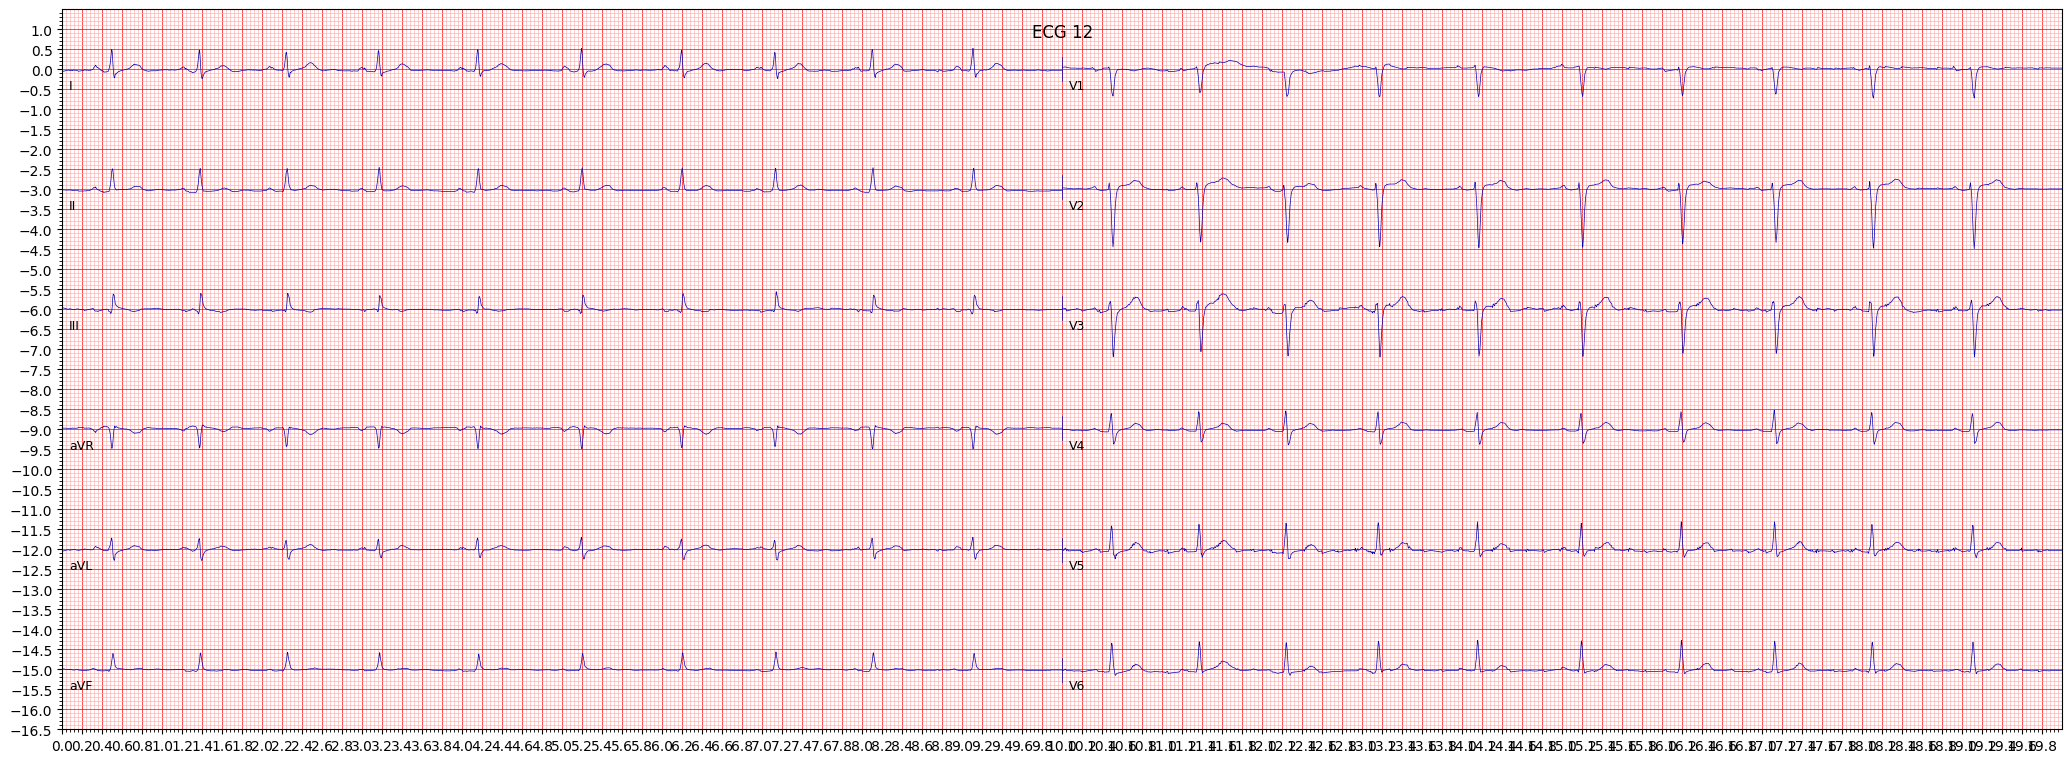 anterior myocardial infarction (AMI) example 5793